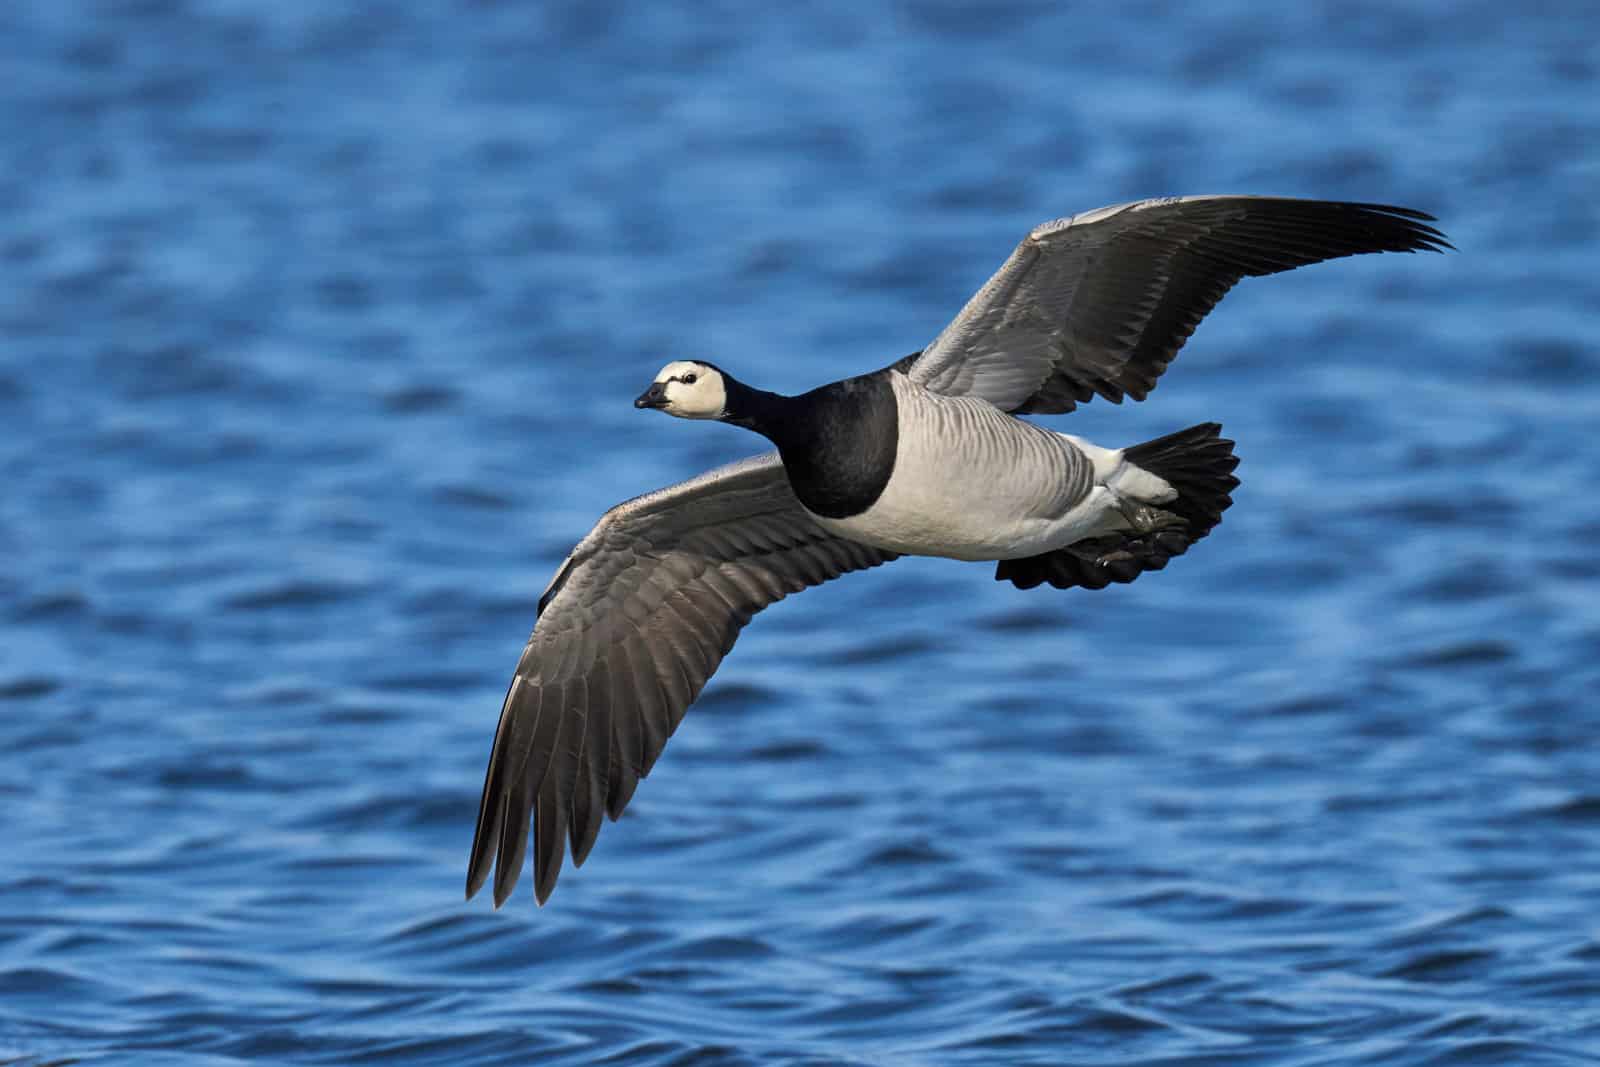 Barnacle goose in its natural habitat in Denmark